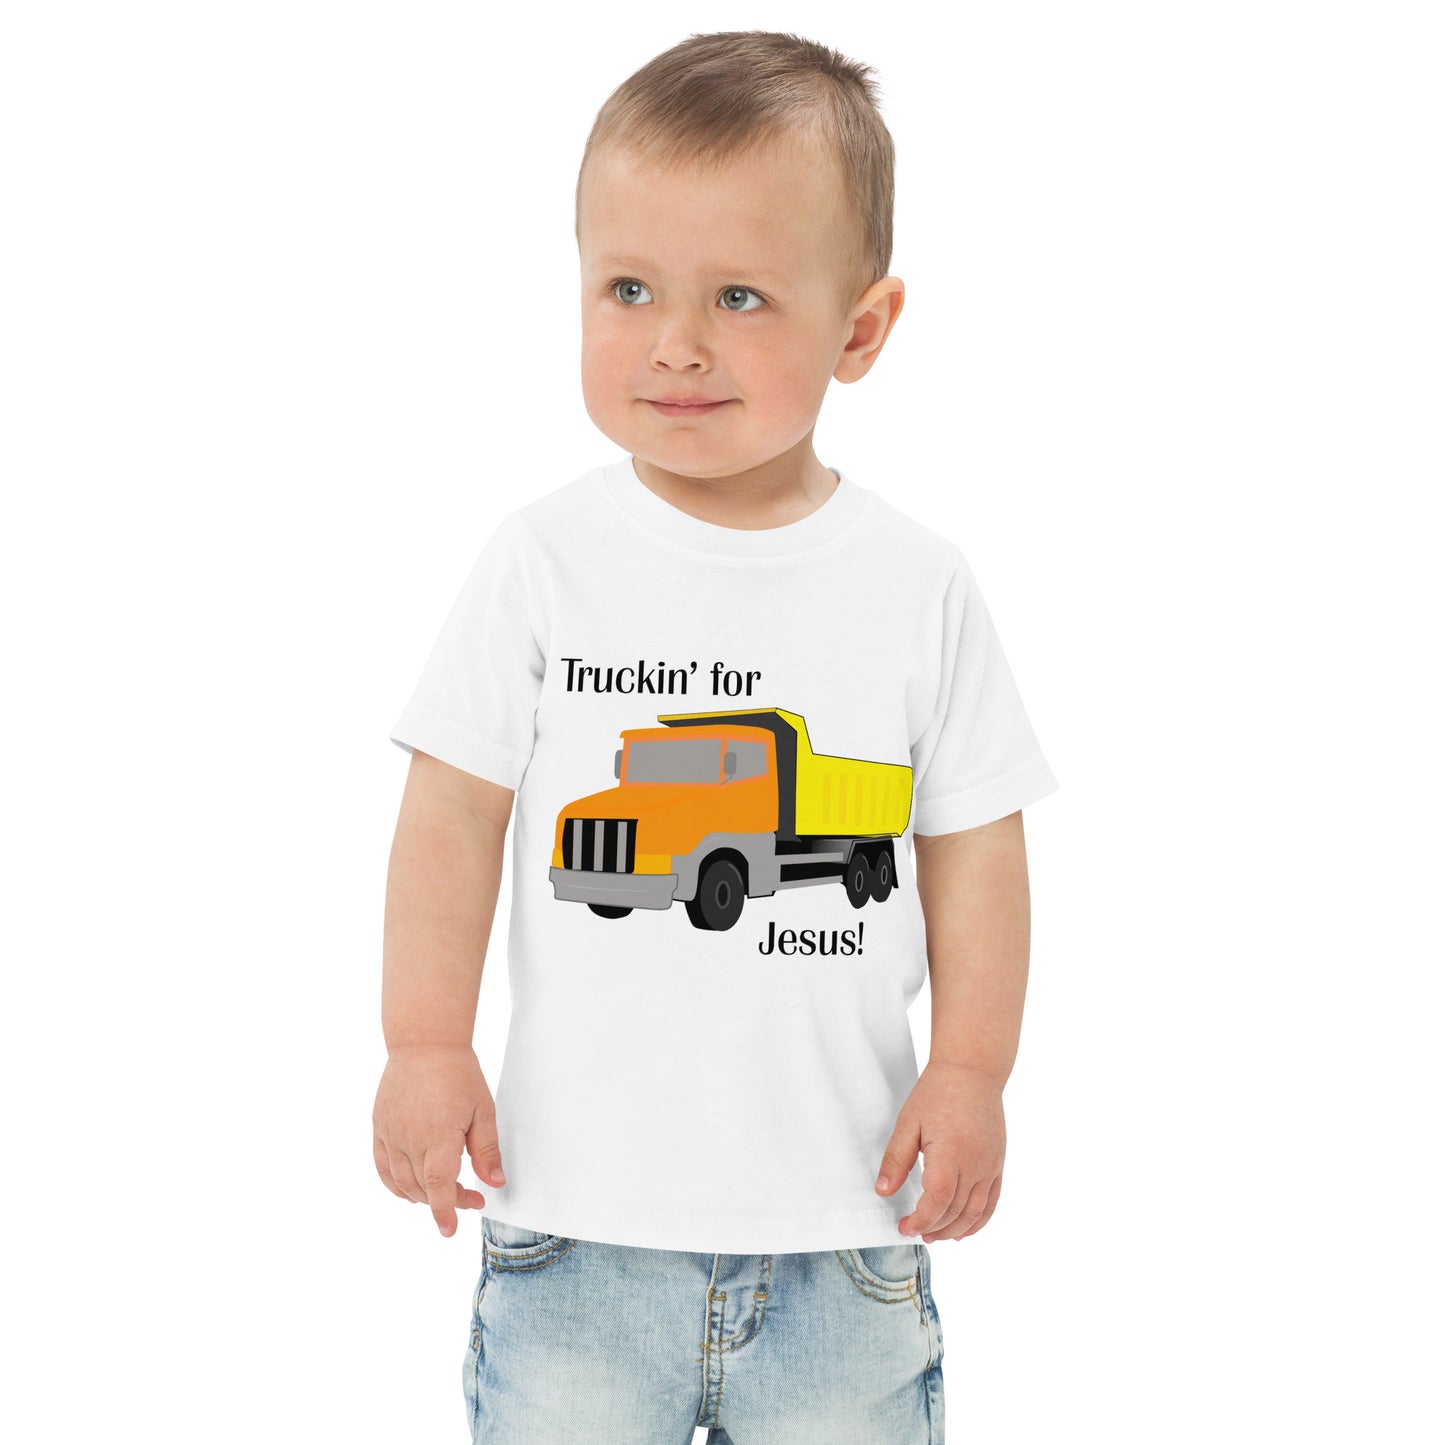 Truckin' for Jesus Toddler T-Shirt